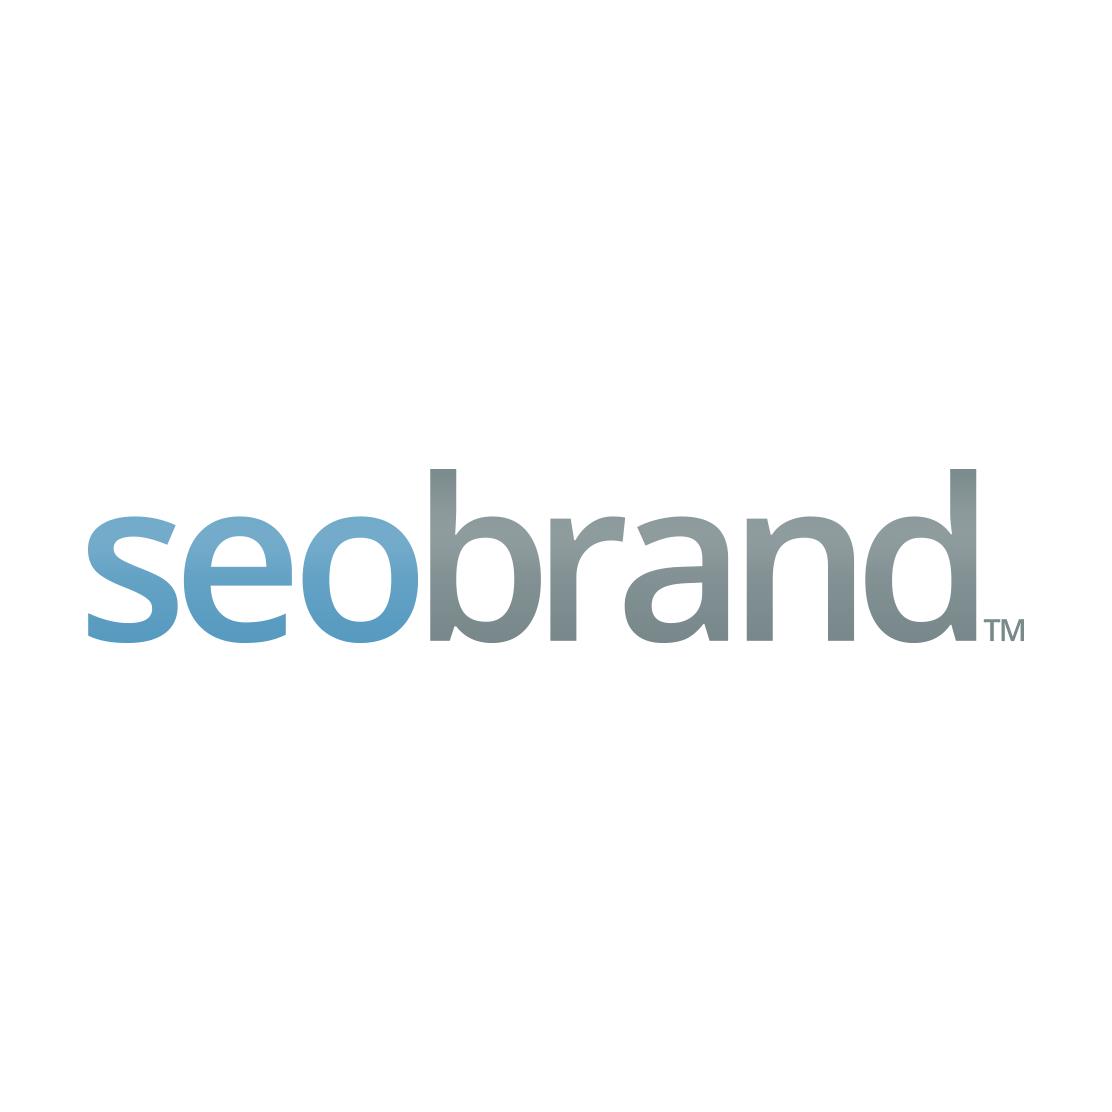 Best Philadelphia SEO Company Logo: SEO Brand